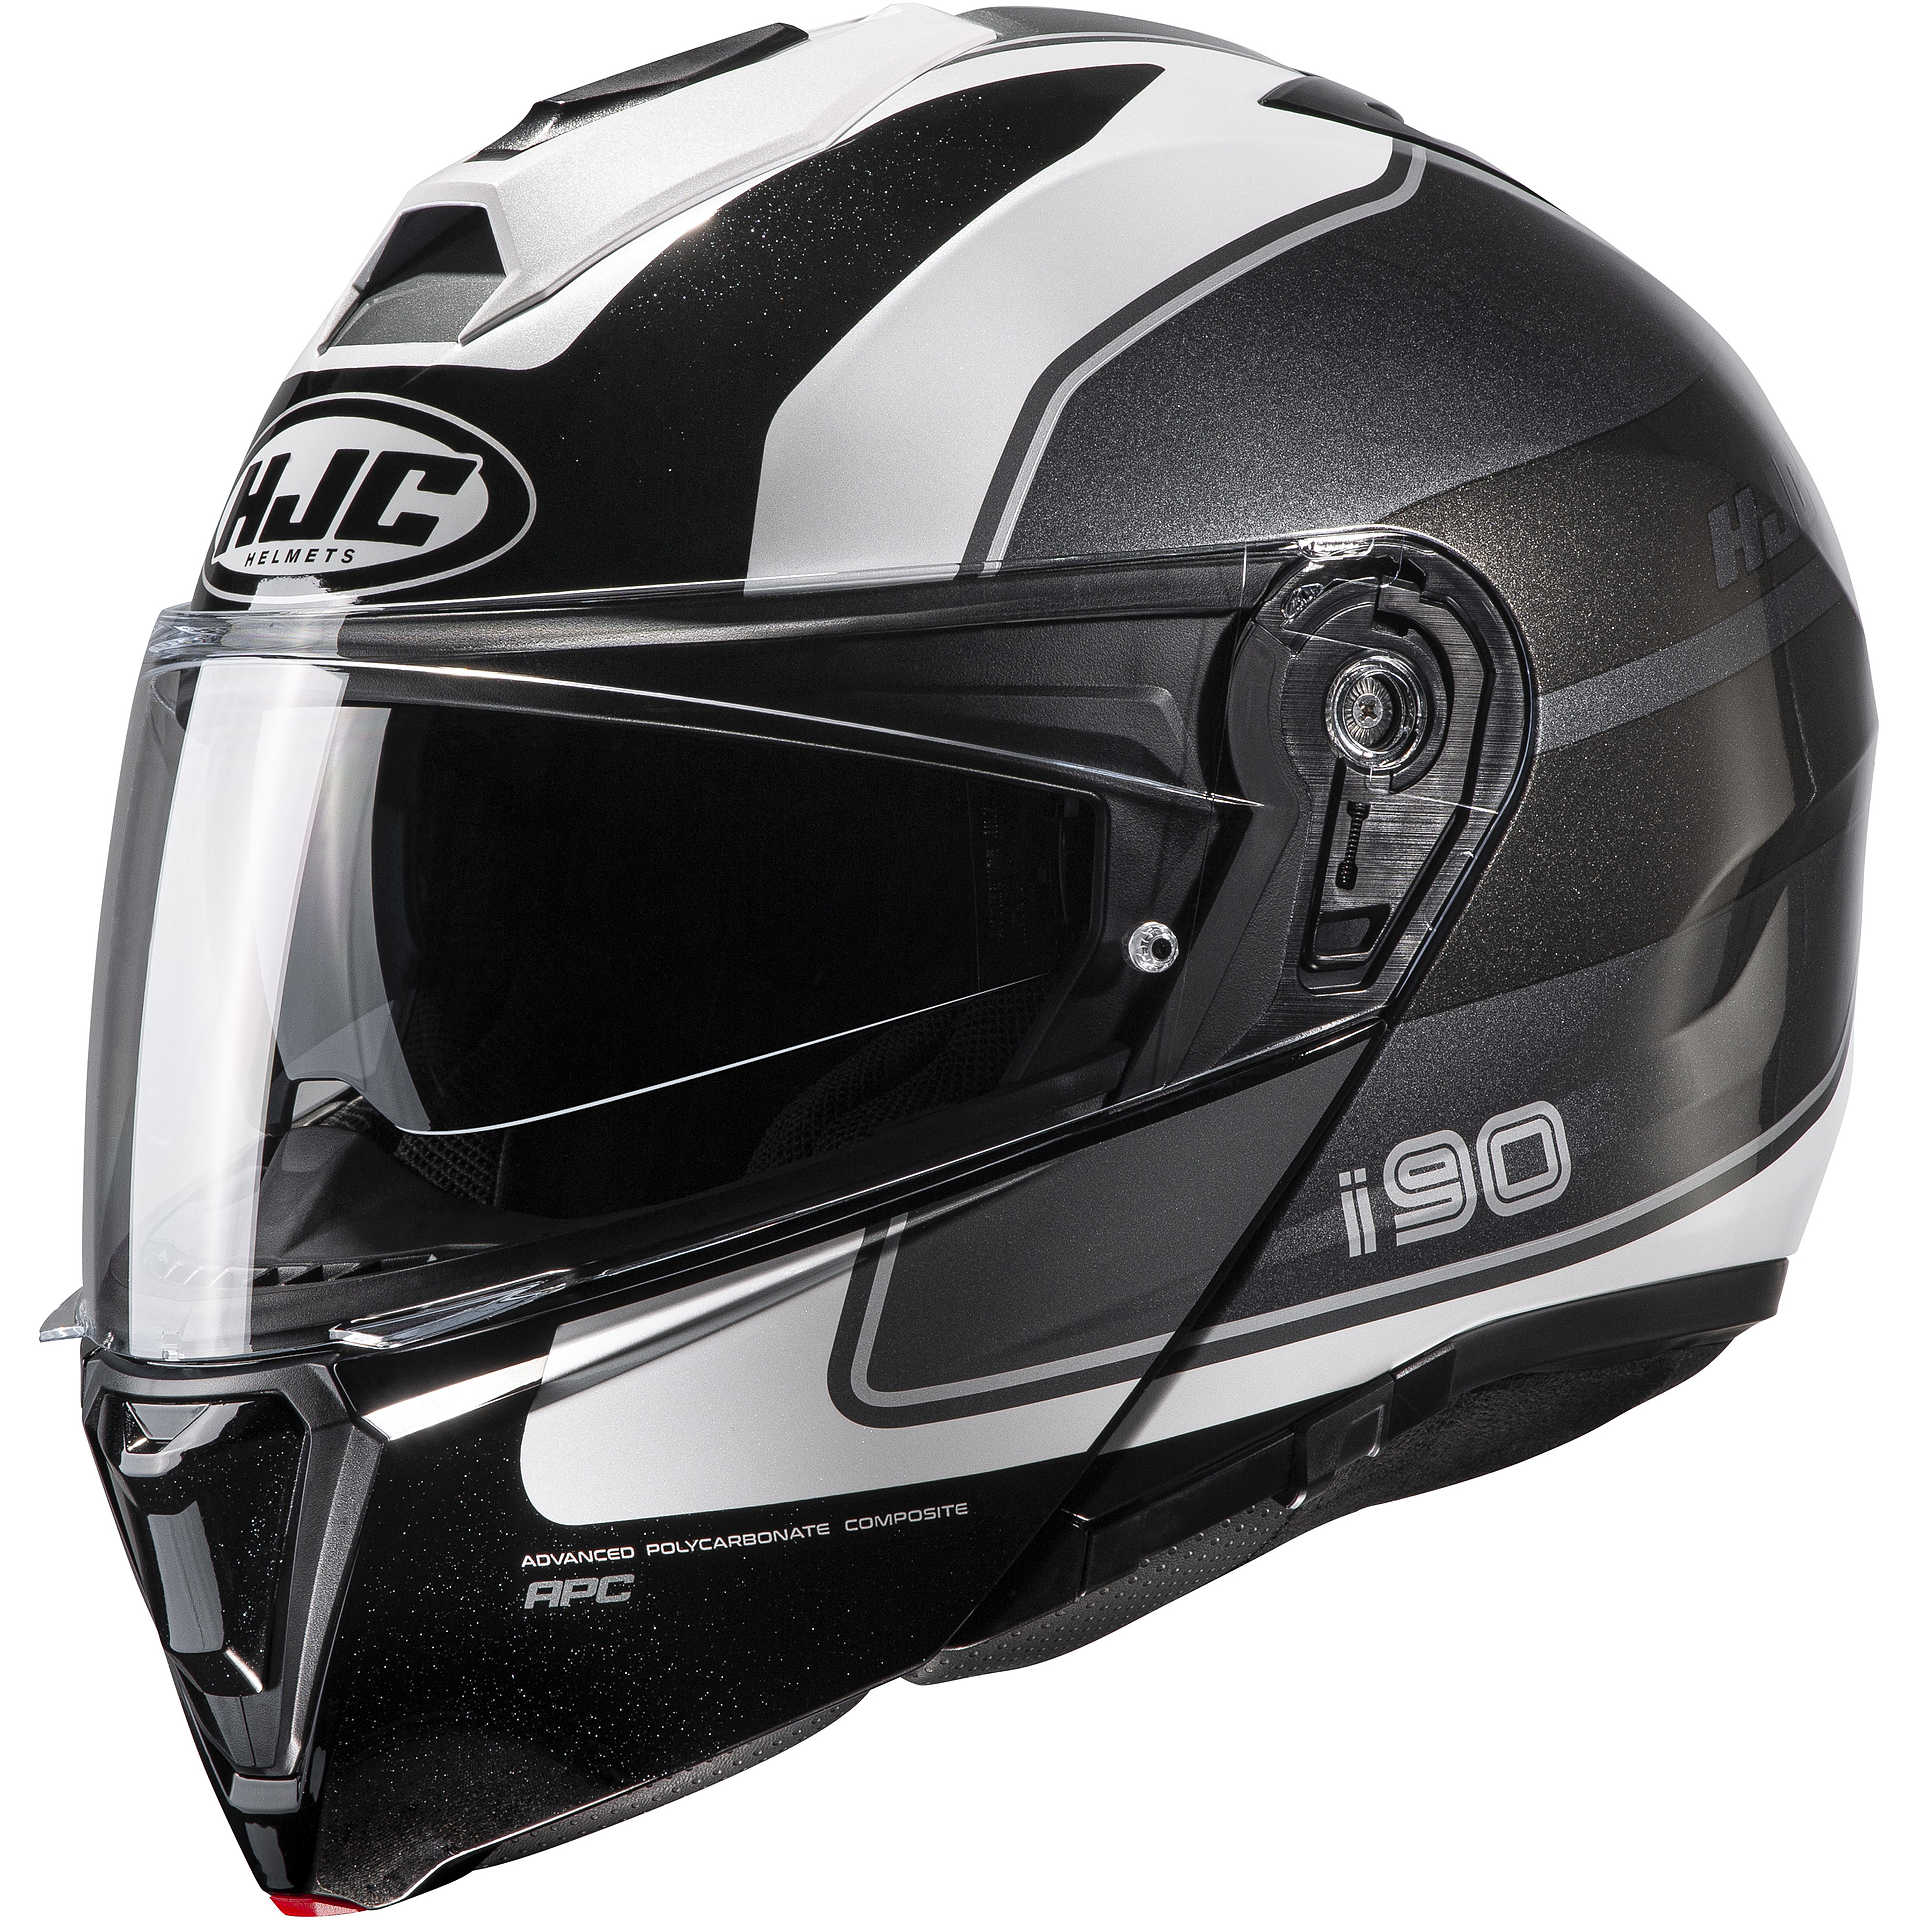 Modular Motorcycle Helmet Hjc i90 WASCO MC5 For Sale Online - Outletmoto.eu